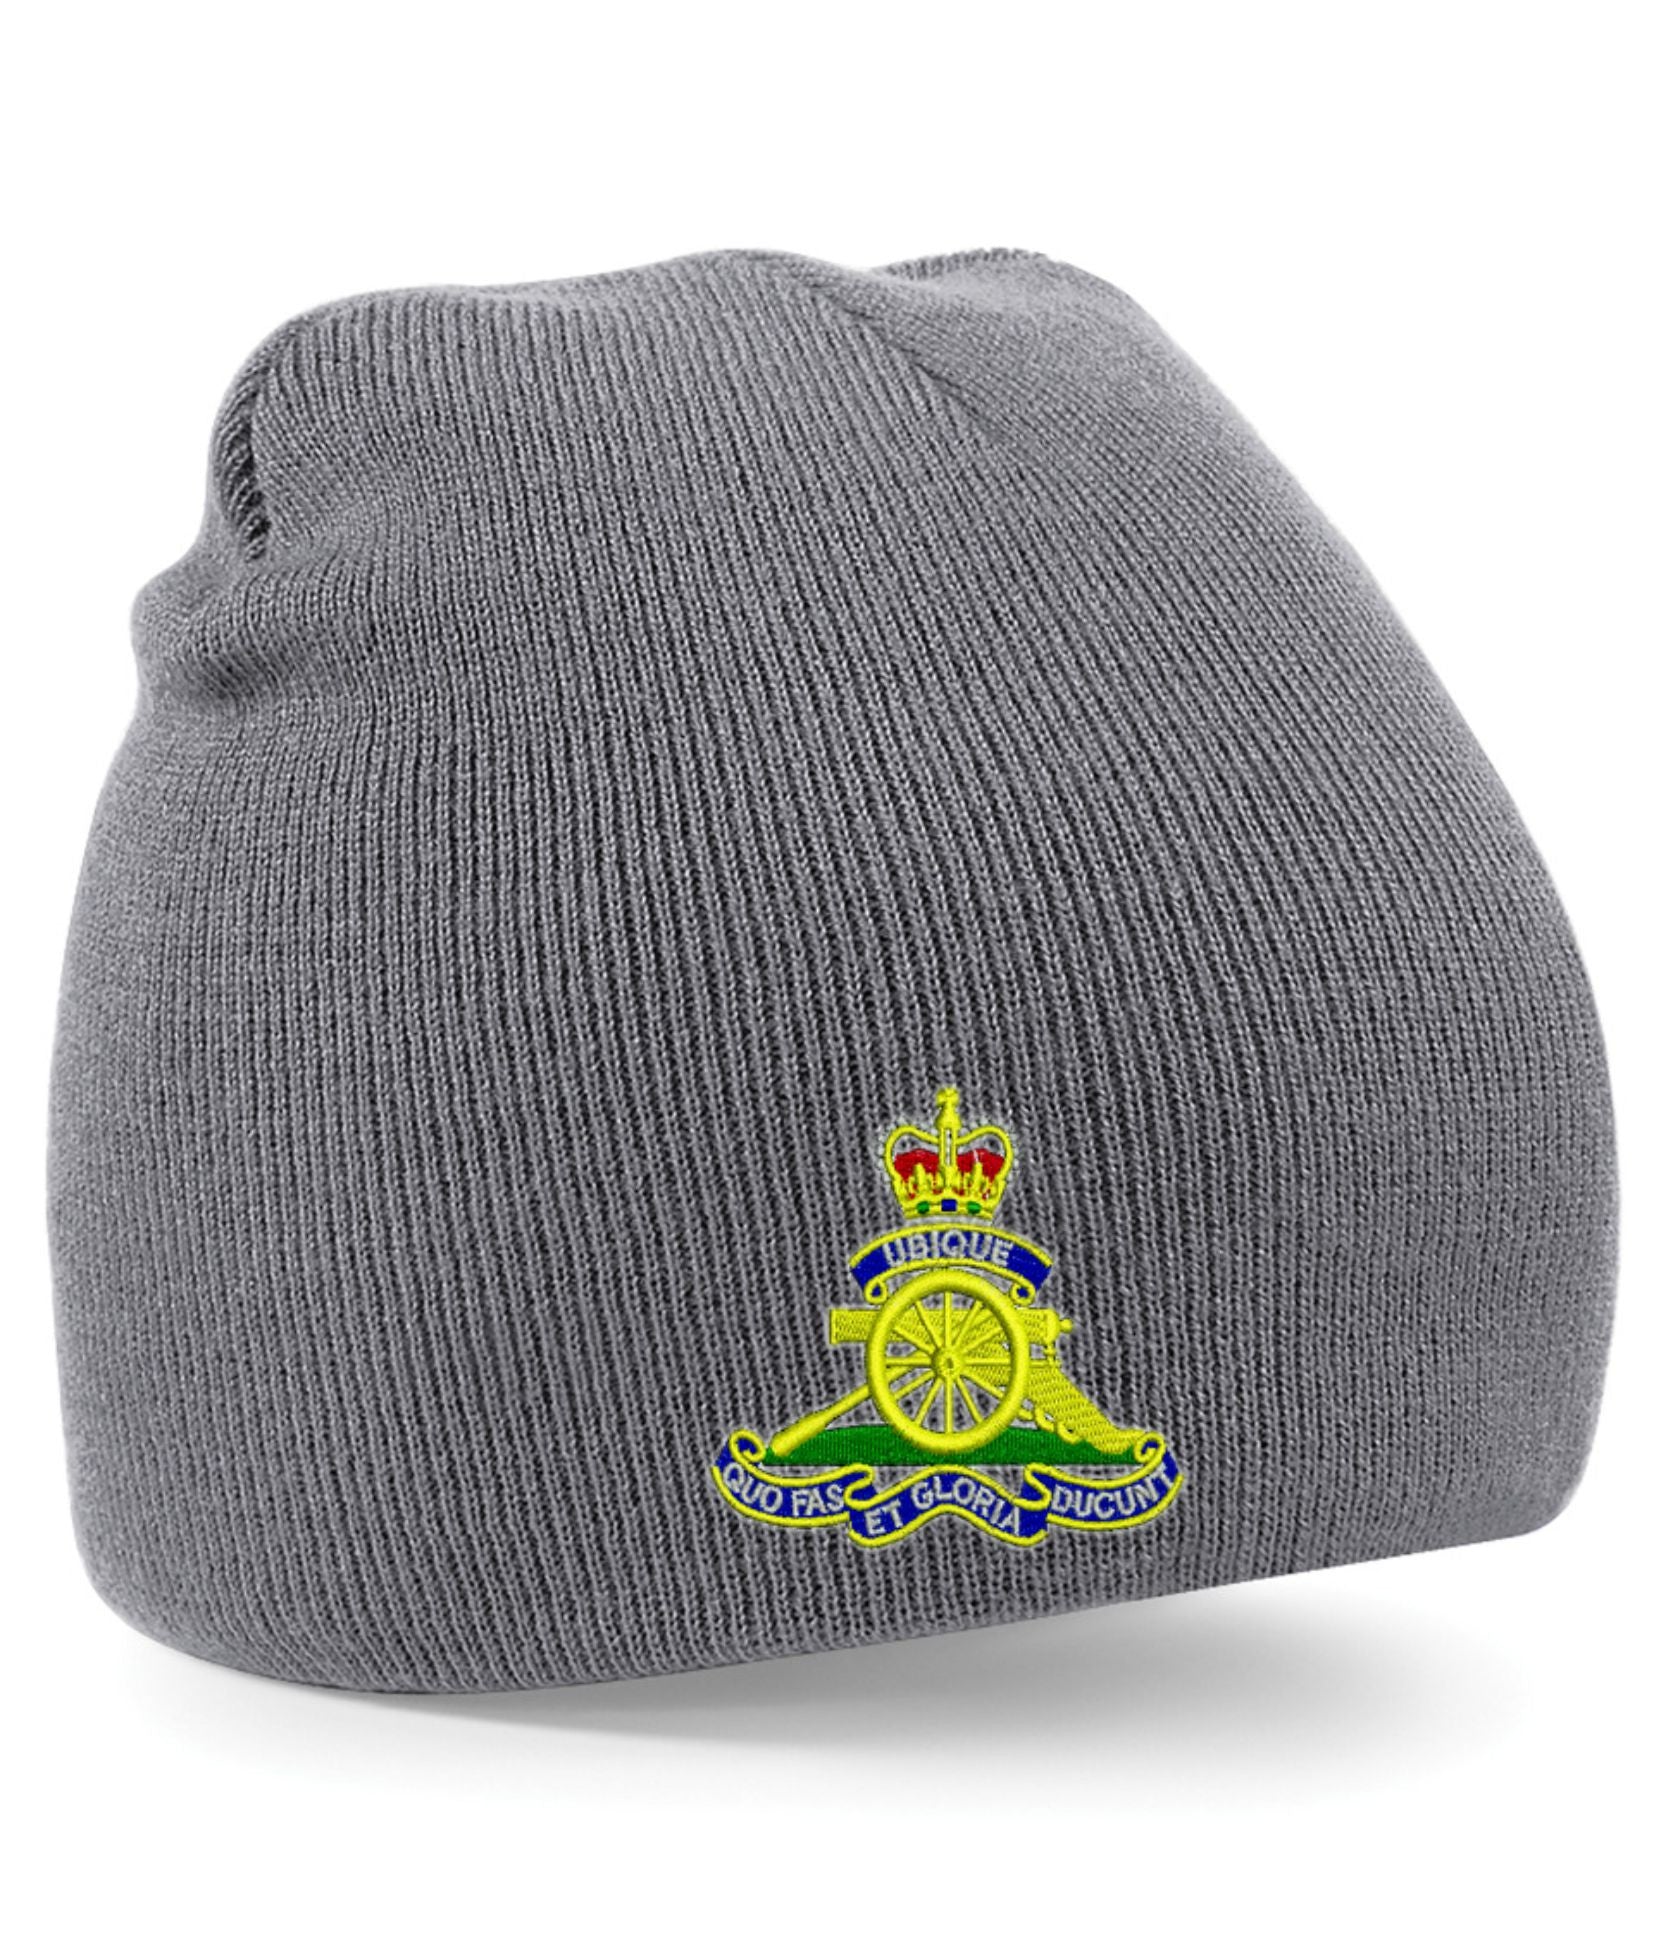 Royal Artillery Beanie Hats